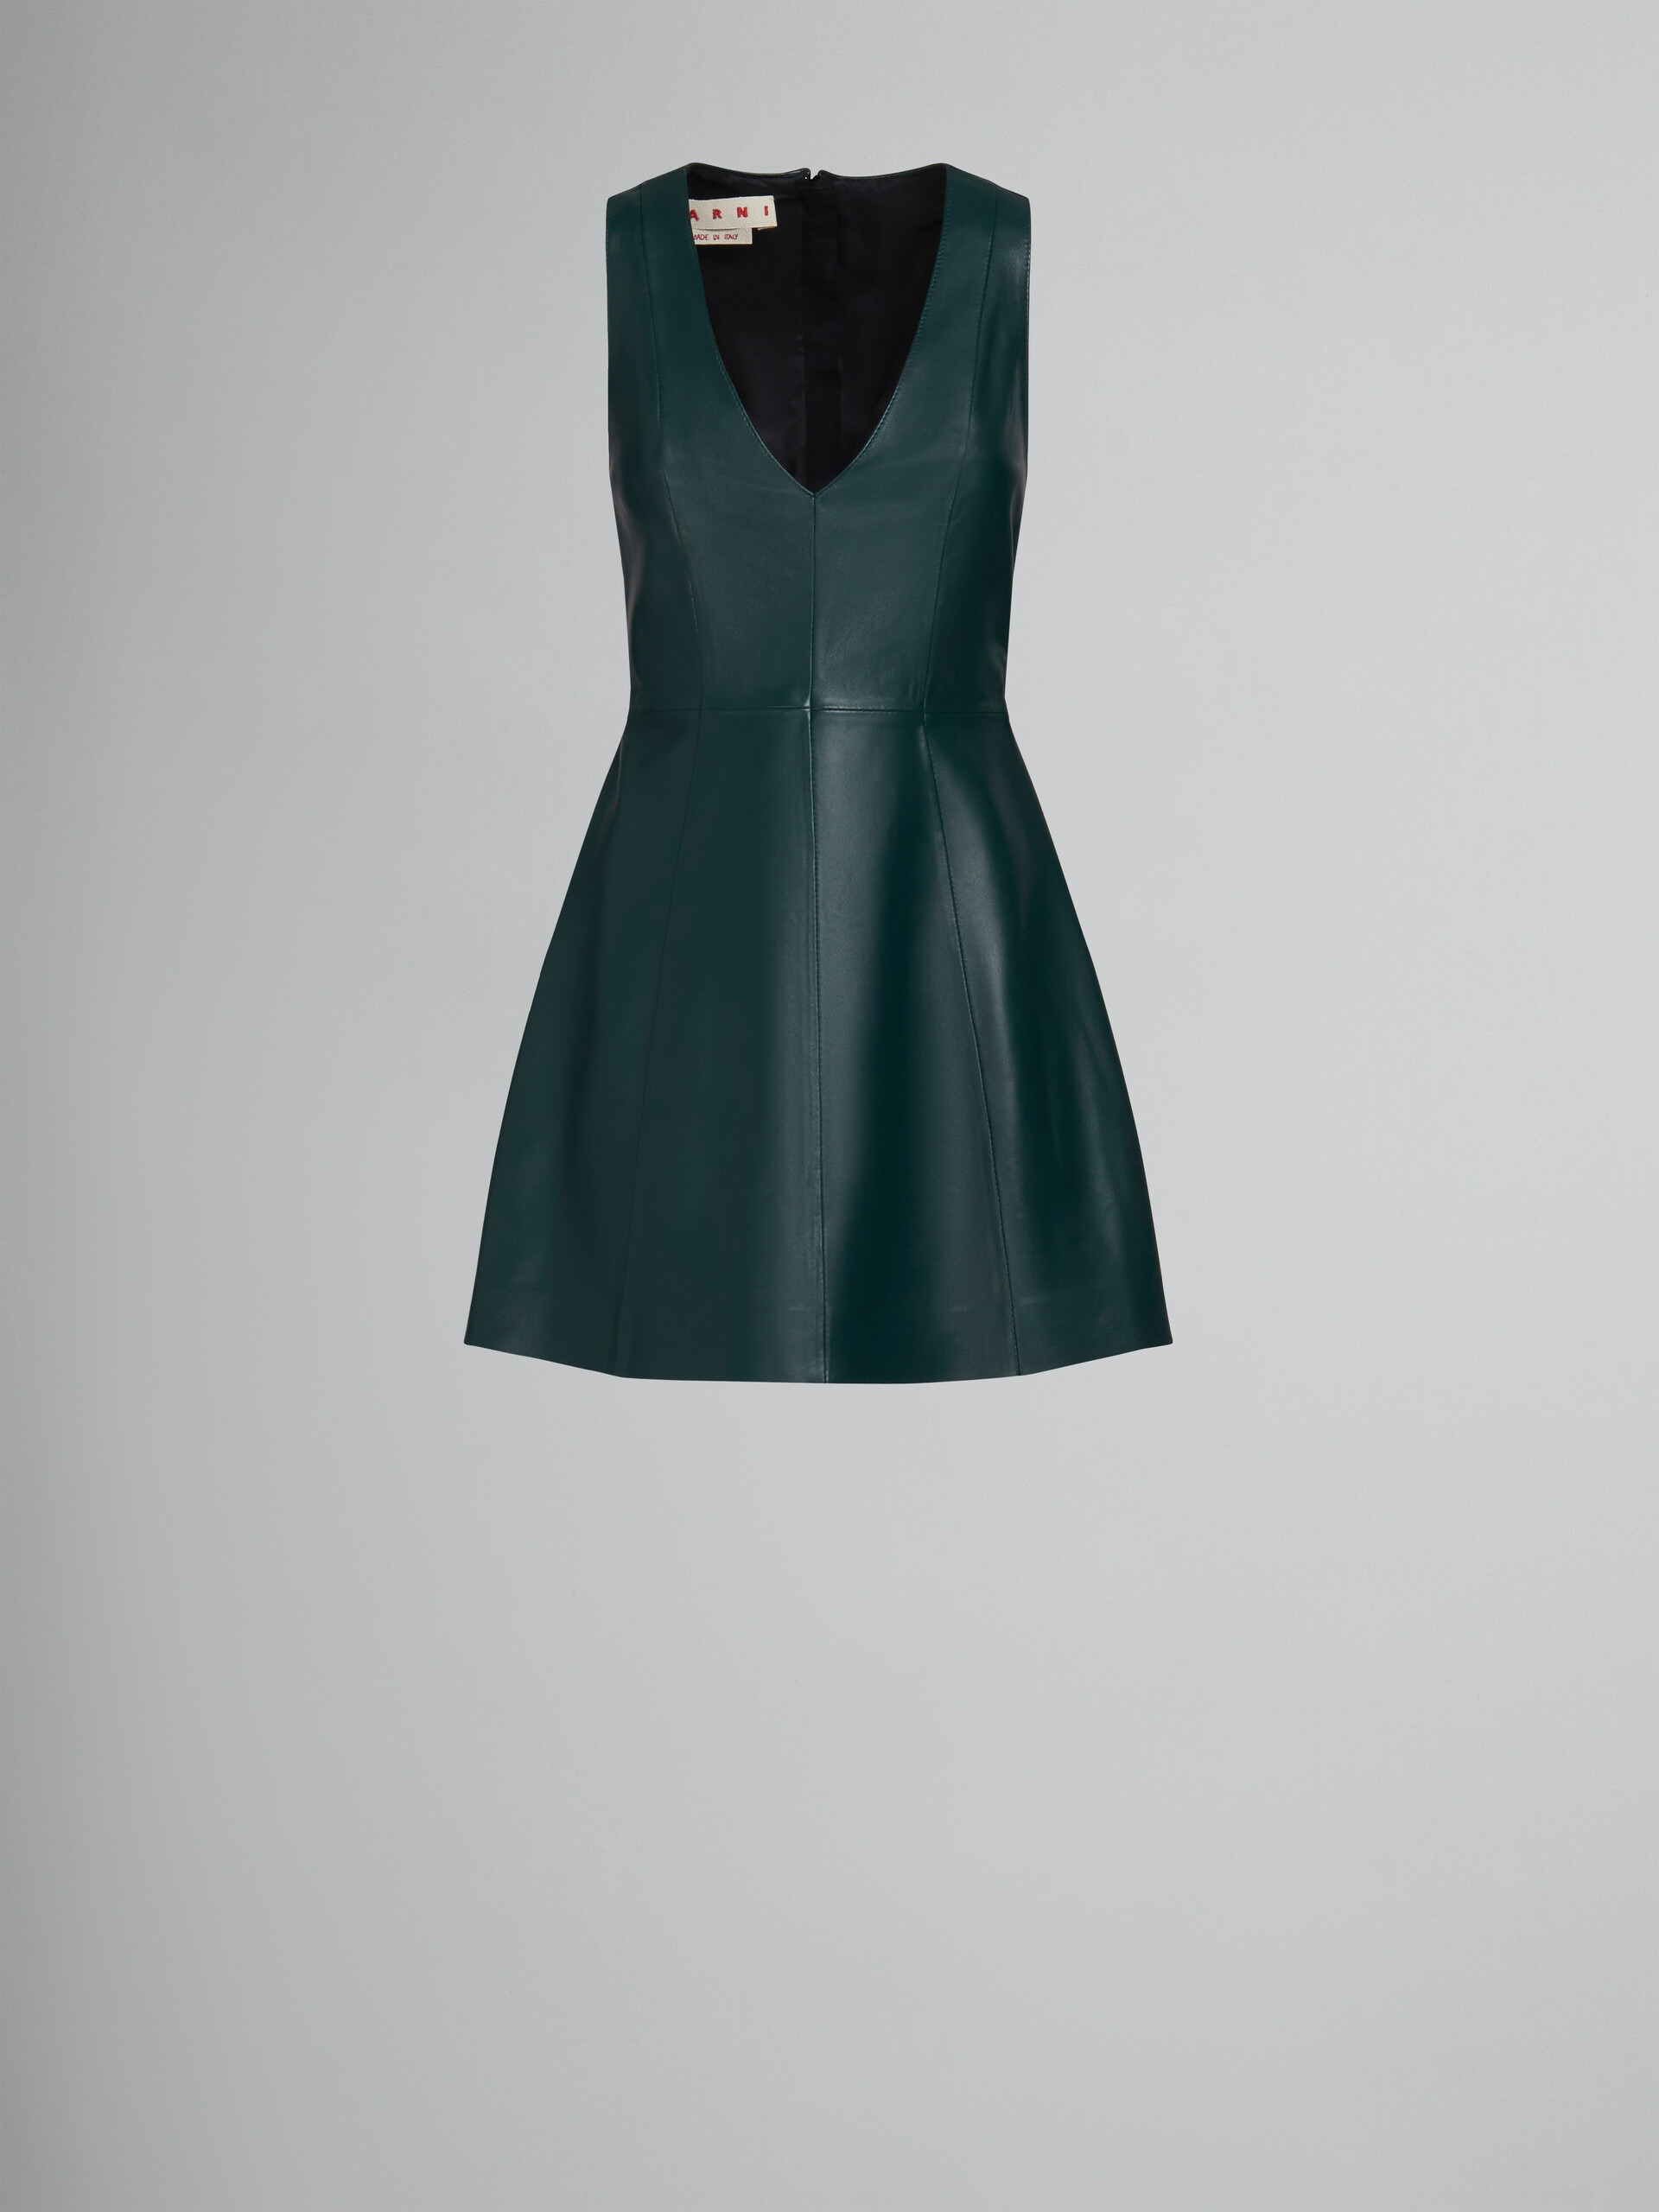 Kleid aus grünem Leder mit V-Ausschnitt - Kleider - Image 1